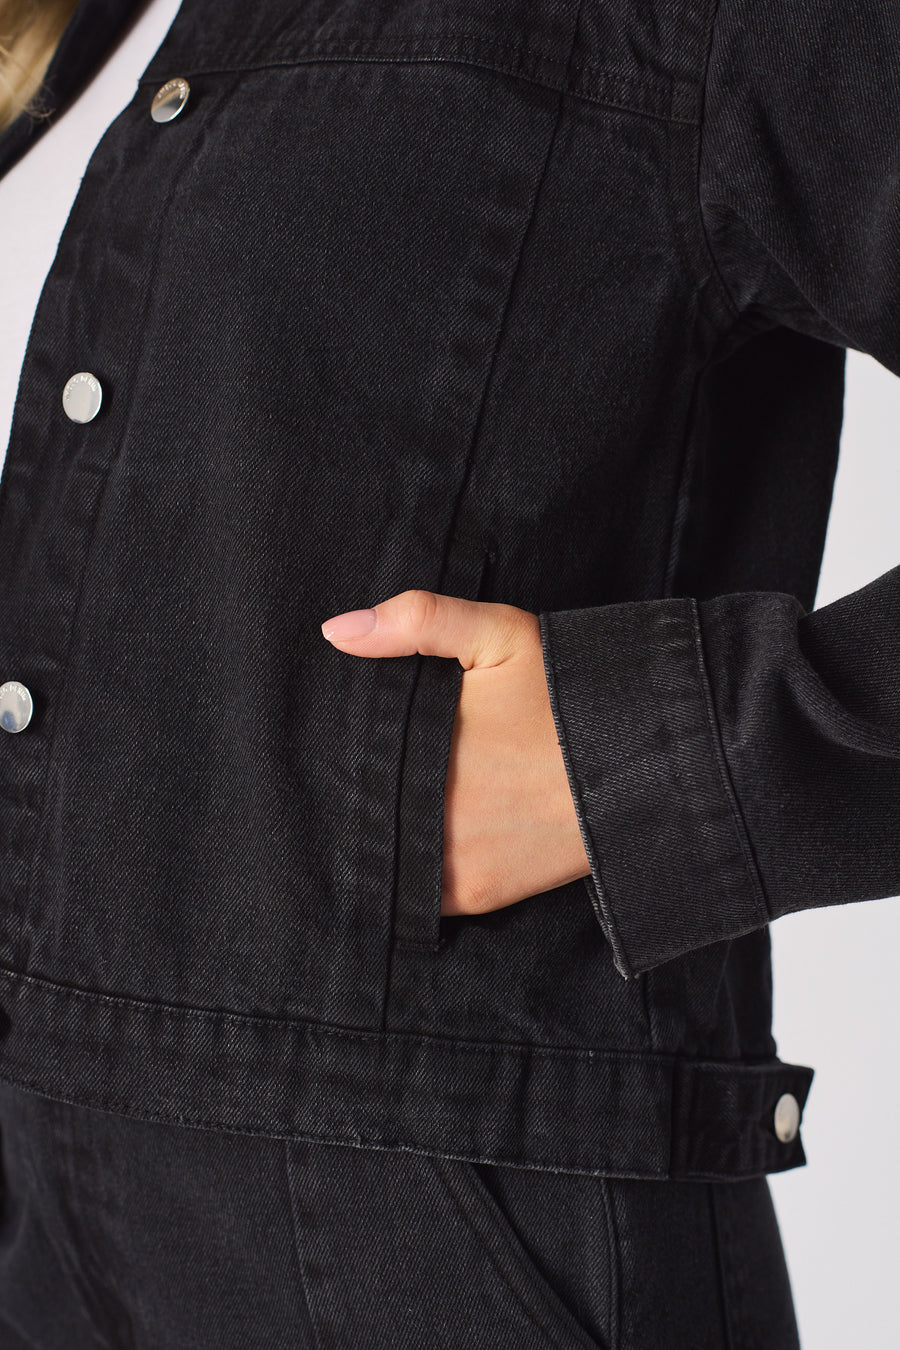 Transeasonal Removable Pockets Denim Jacket - Black Wash